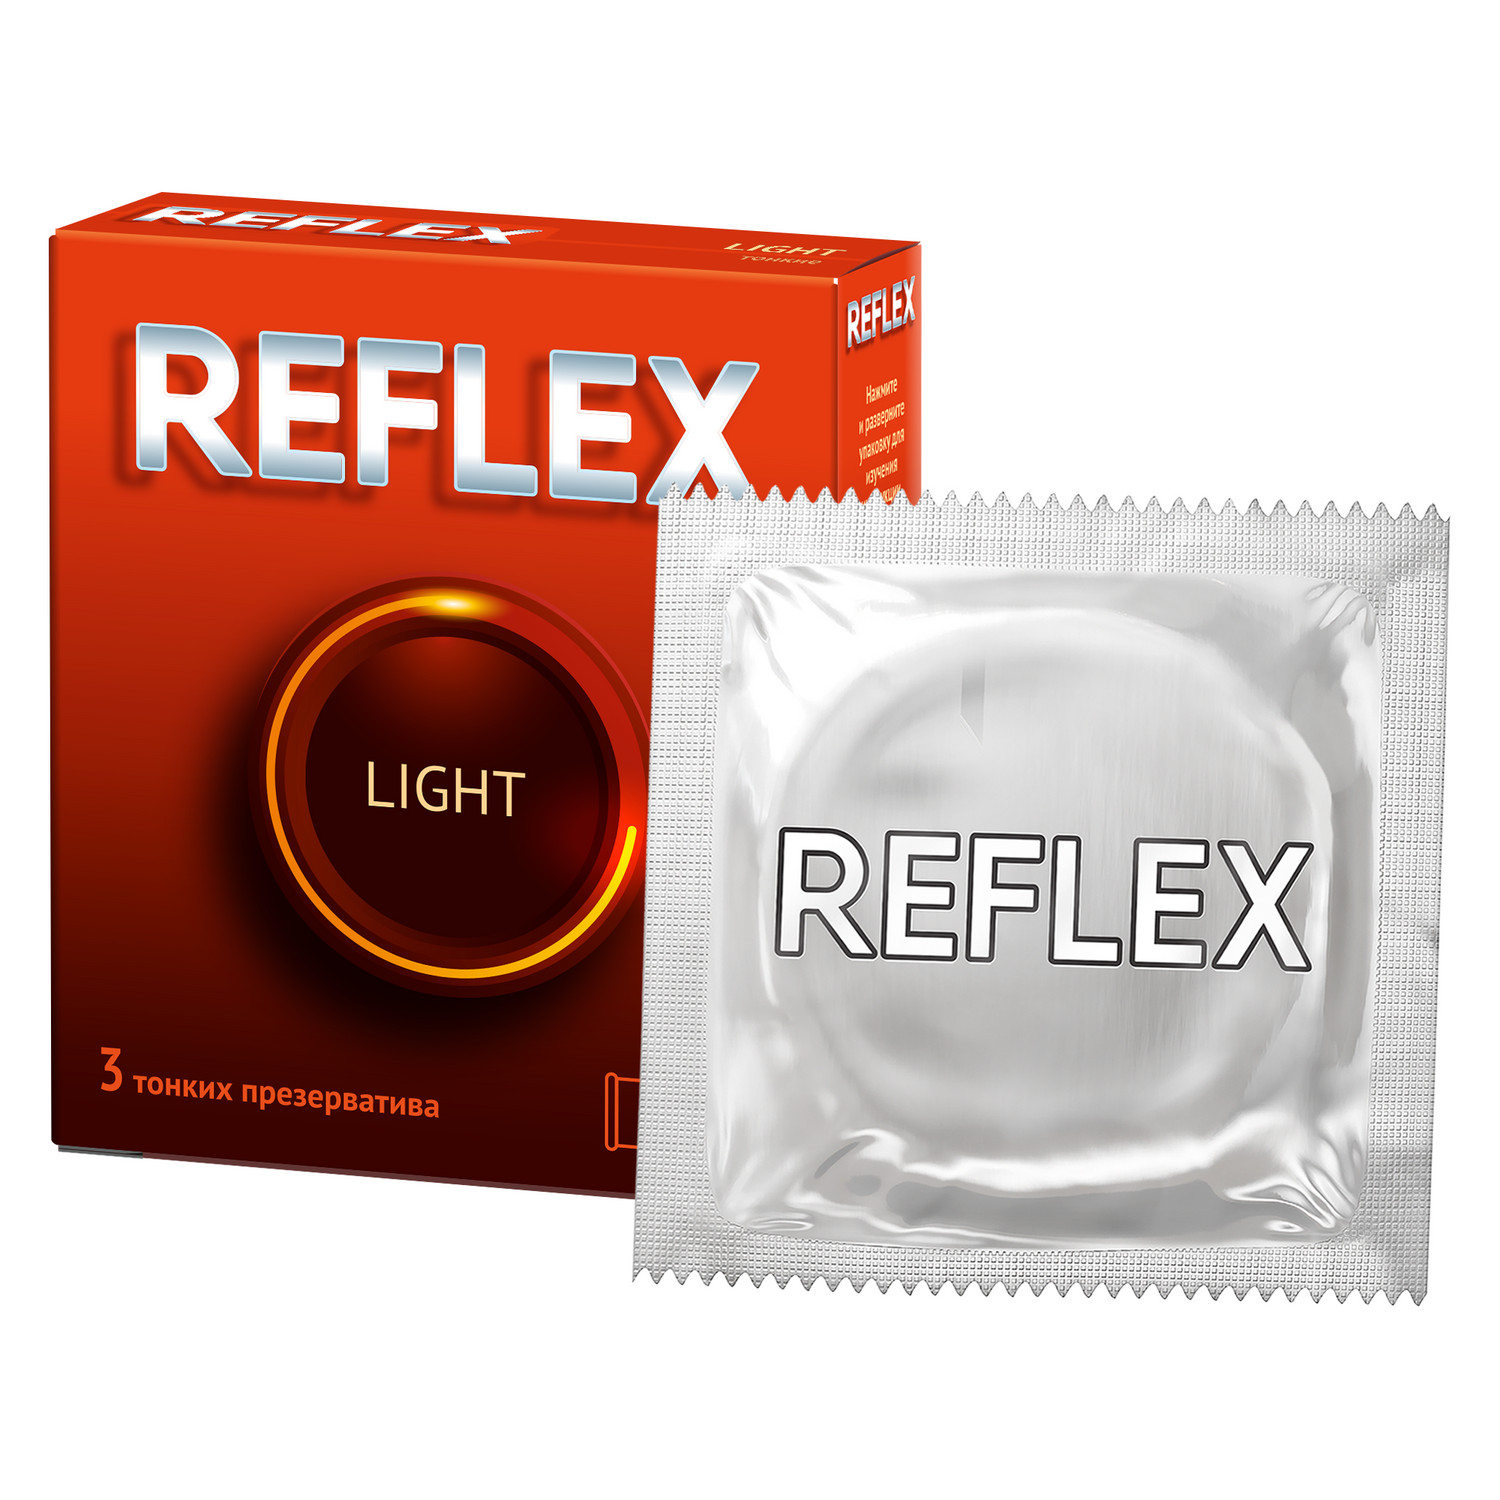 Reflex Light презервативы в смазке, 3 шт.